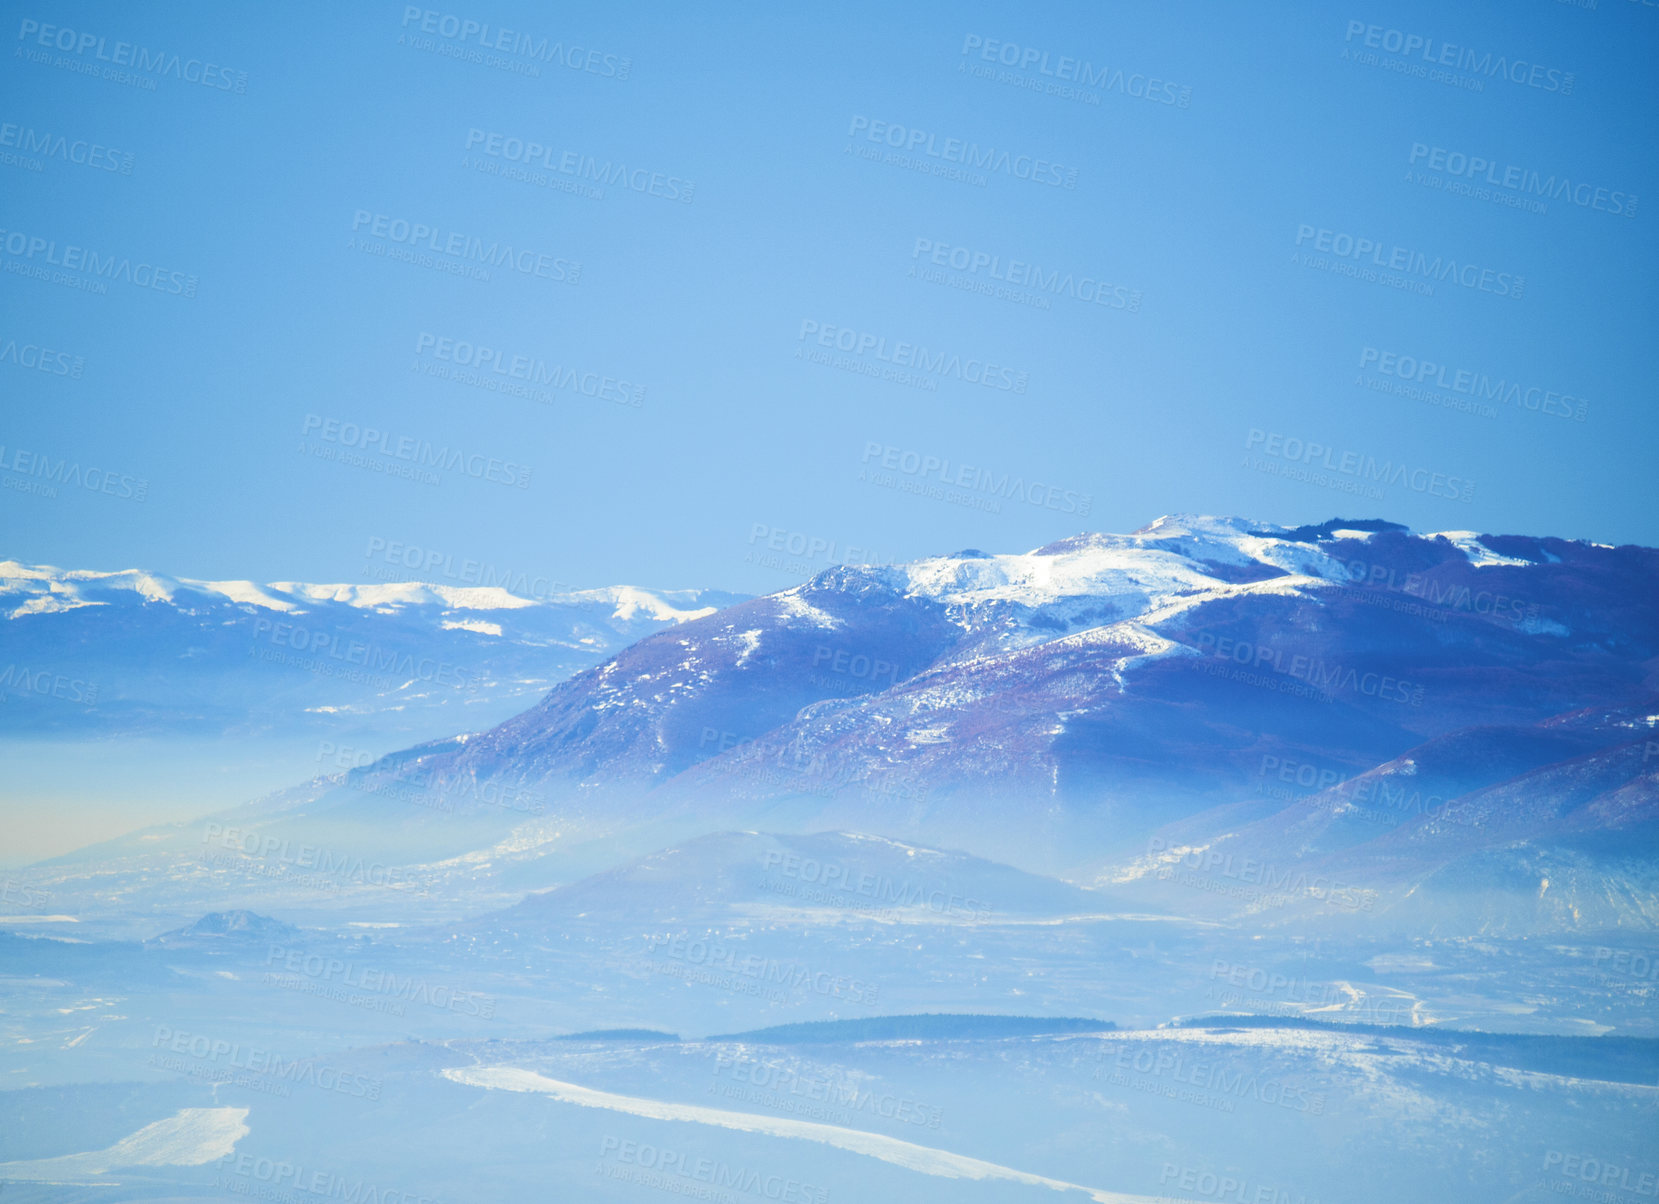 Buy stock photo Shot of a scenic winter landscape